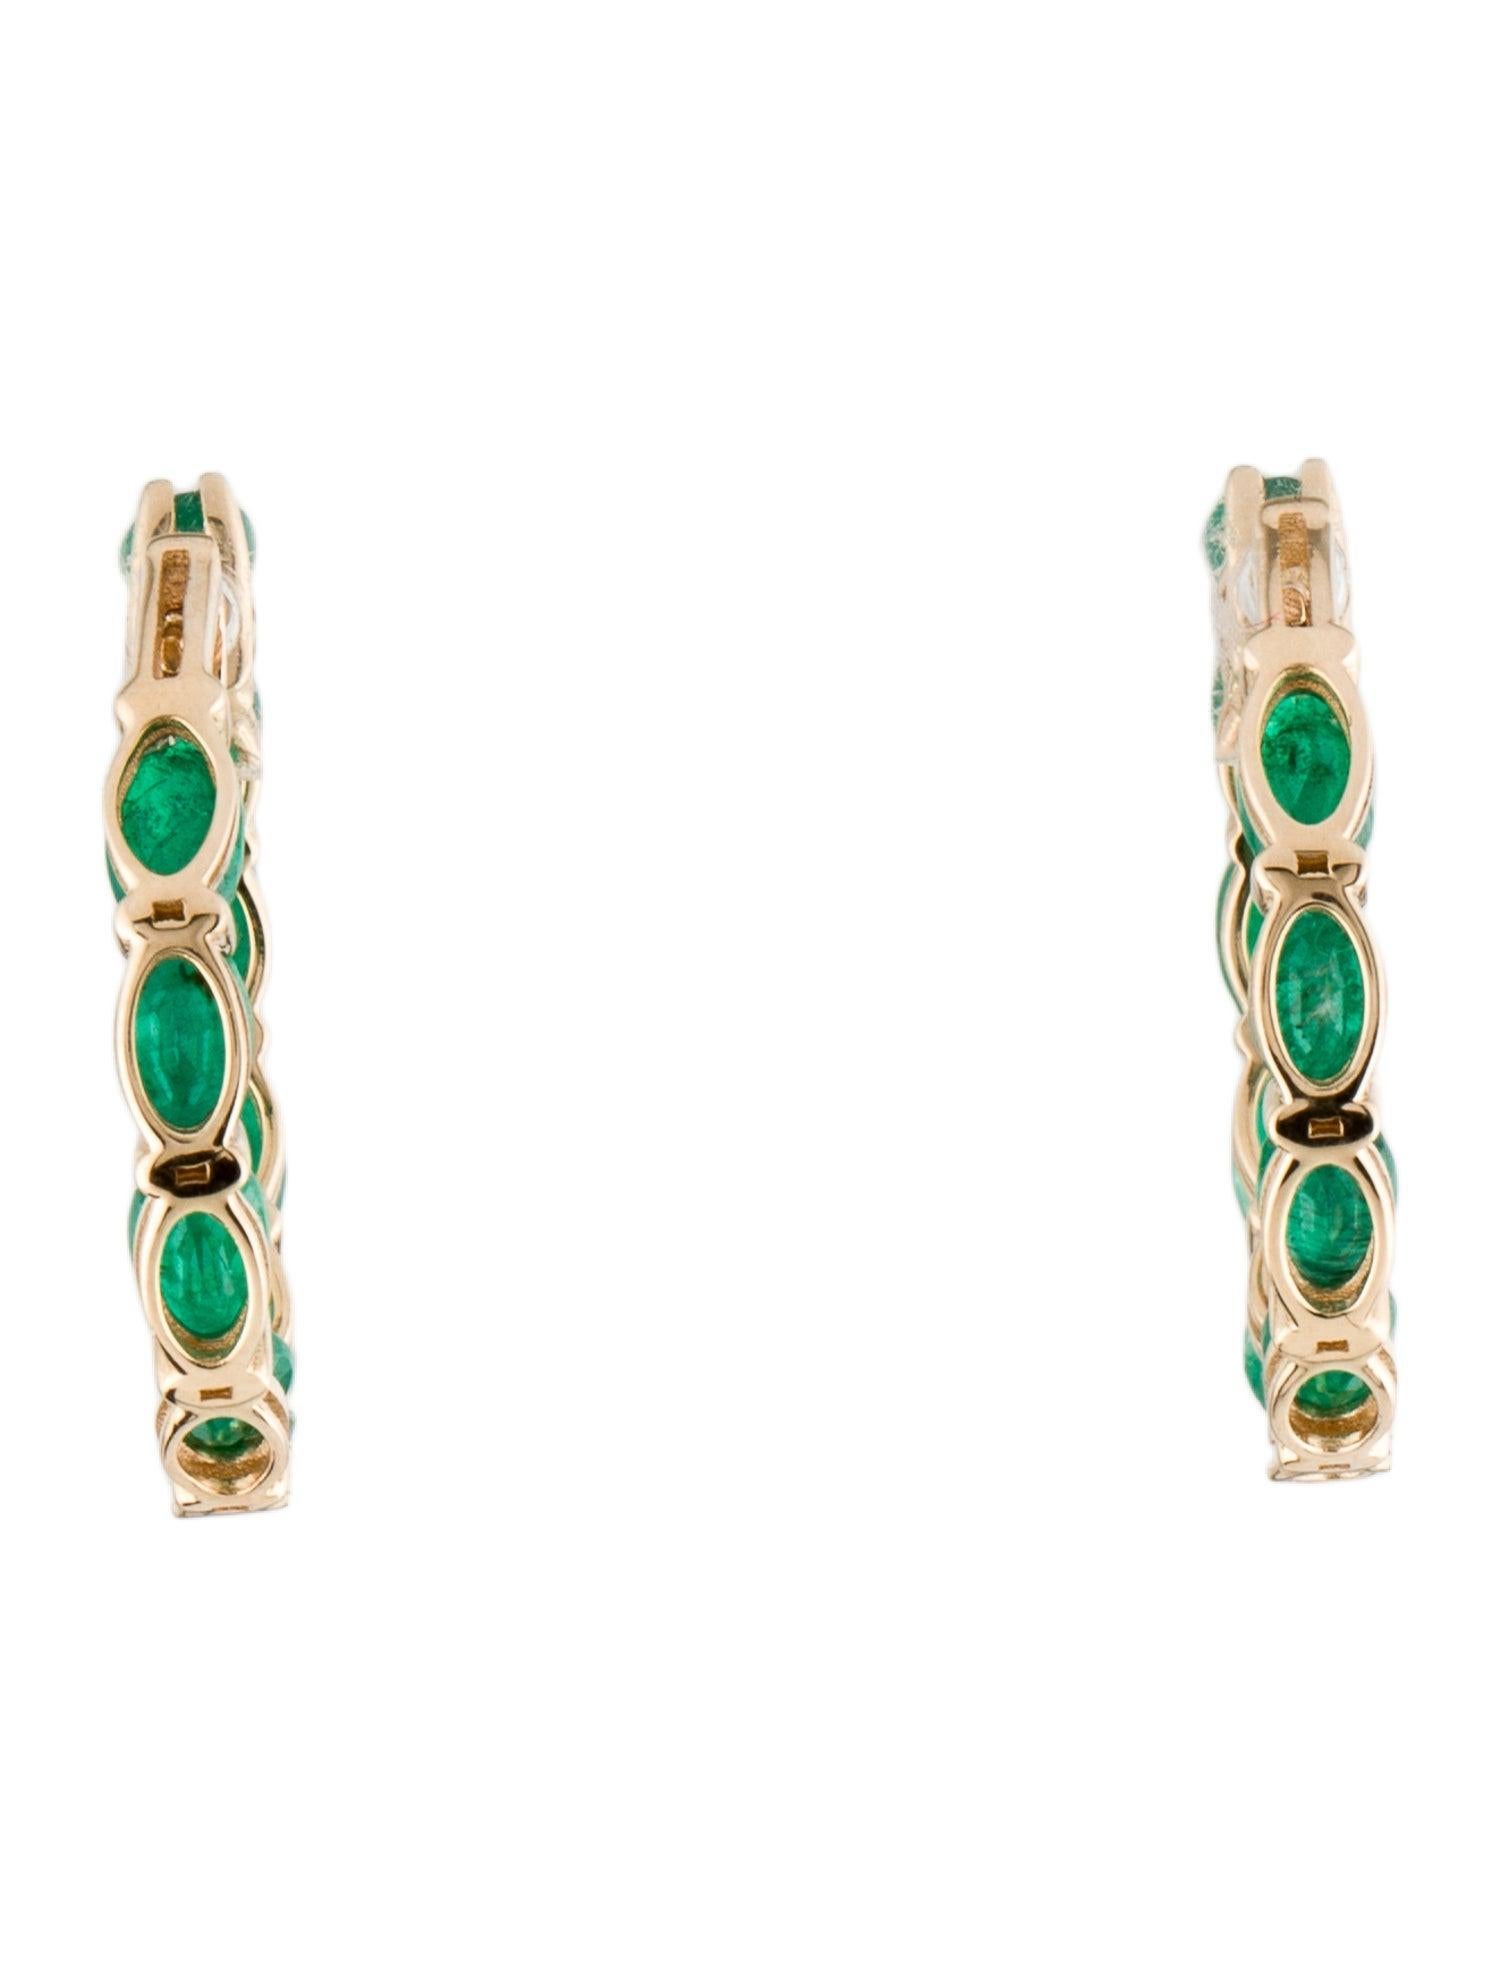 Oval Cut 14K Yellow Gold Inside-Outside Hoop Earrings with Oval Emeralds For Sale